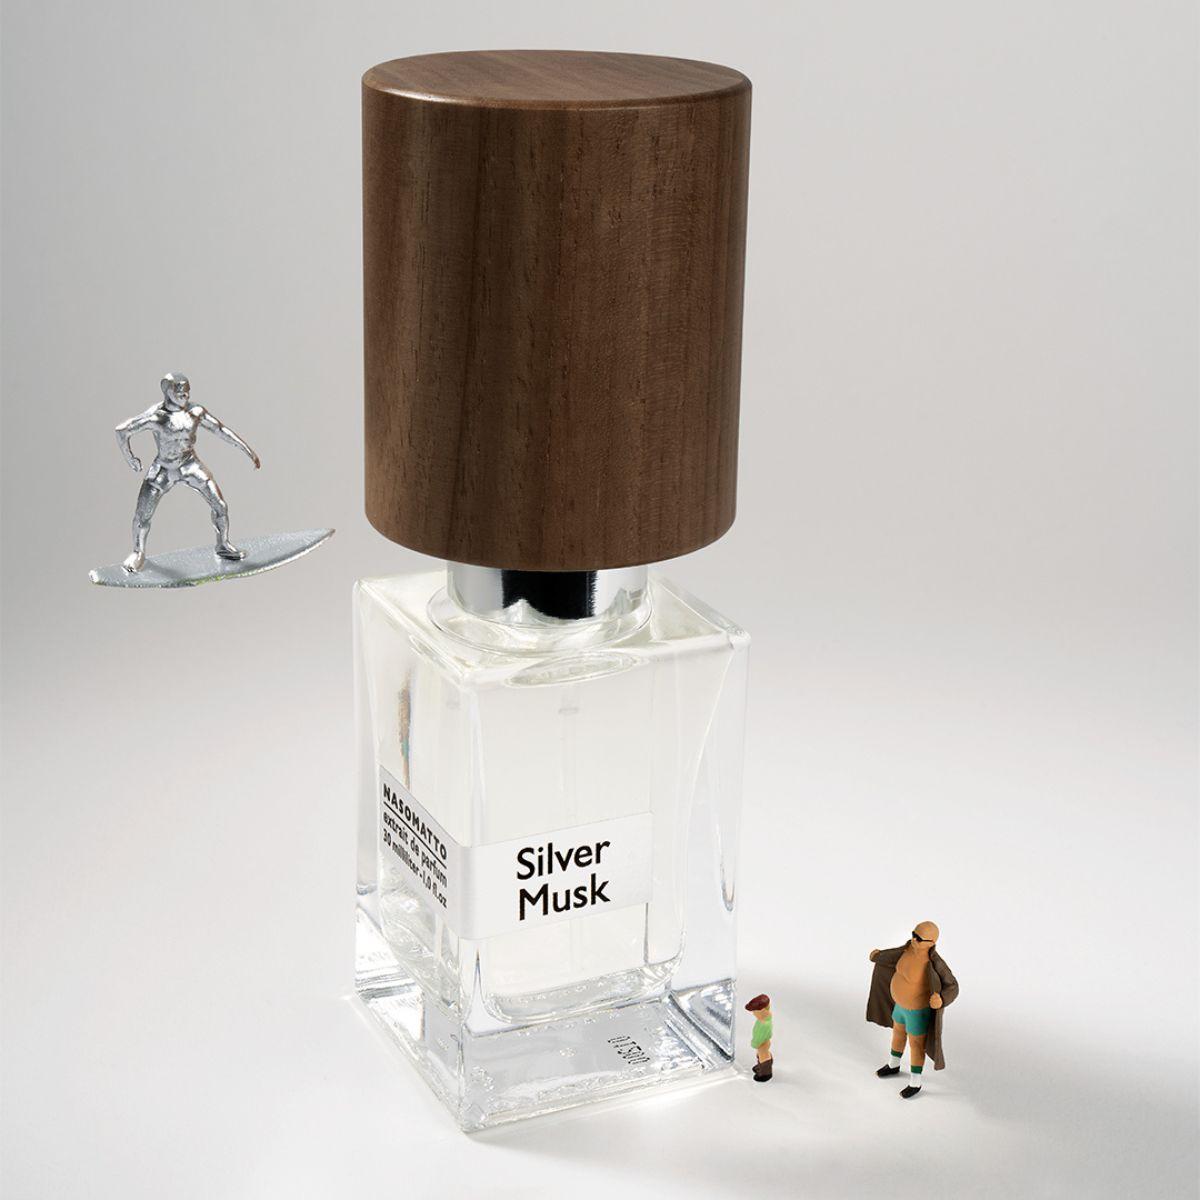 Image of Silver Musk extrait de parfum 30 ml by the perfume brand Nasomatto